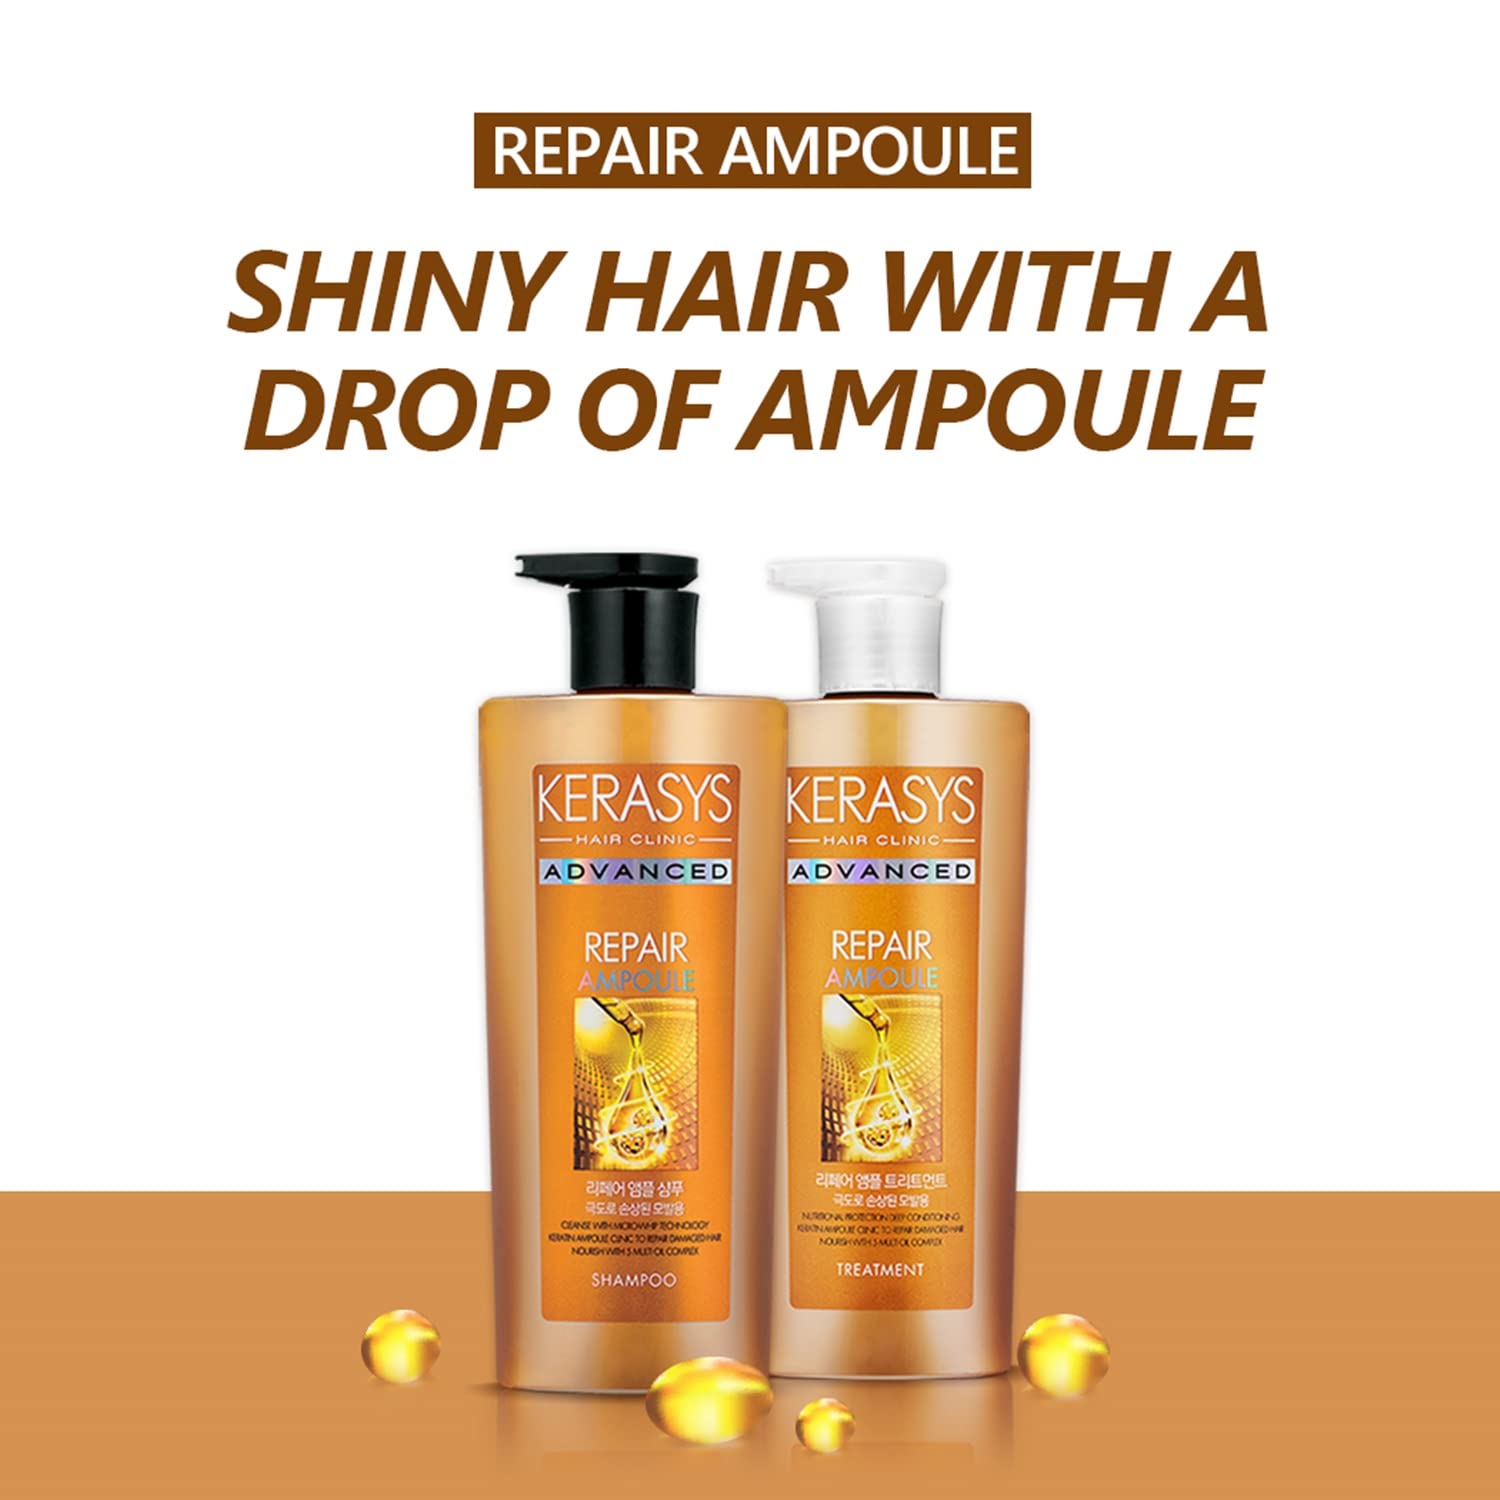 Kerasys Advanced Repair Ampoule Shampoo for Damaged Hair, 600ml